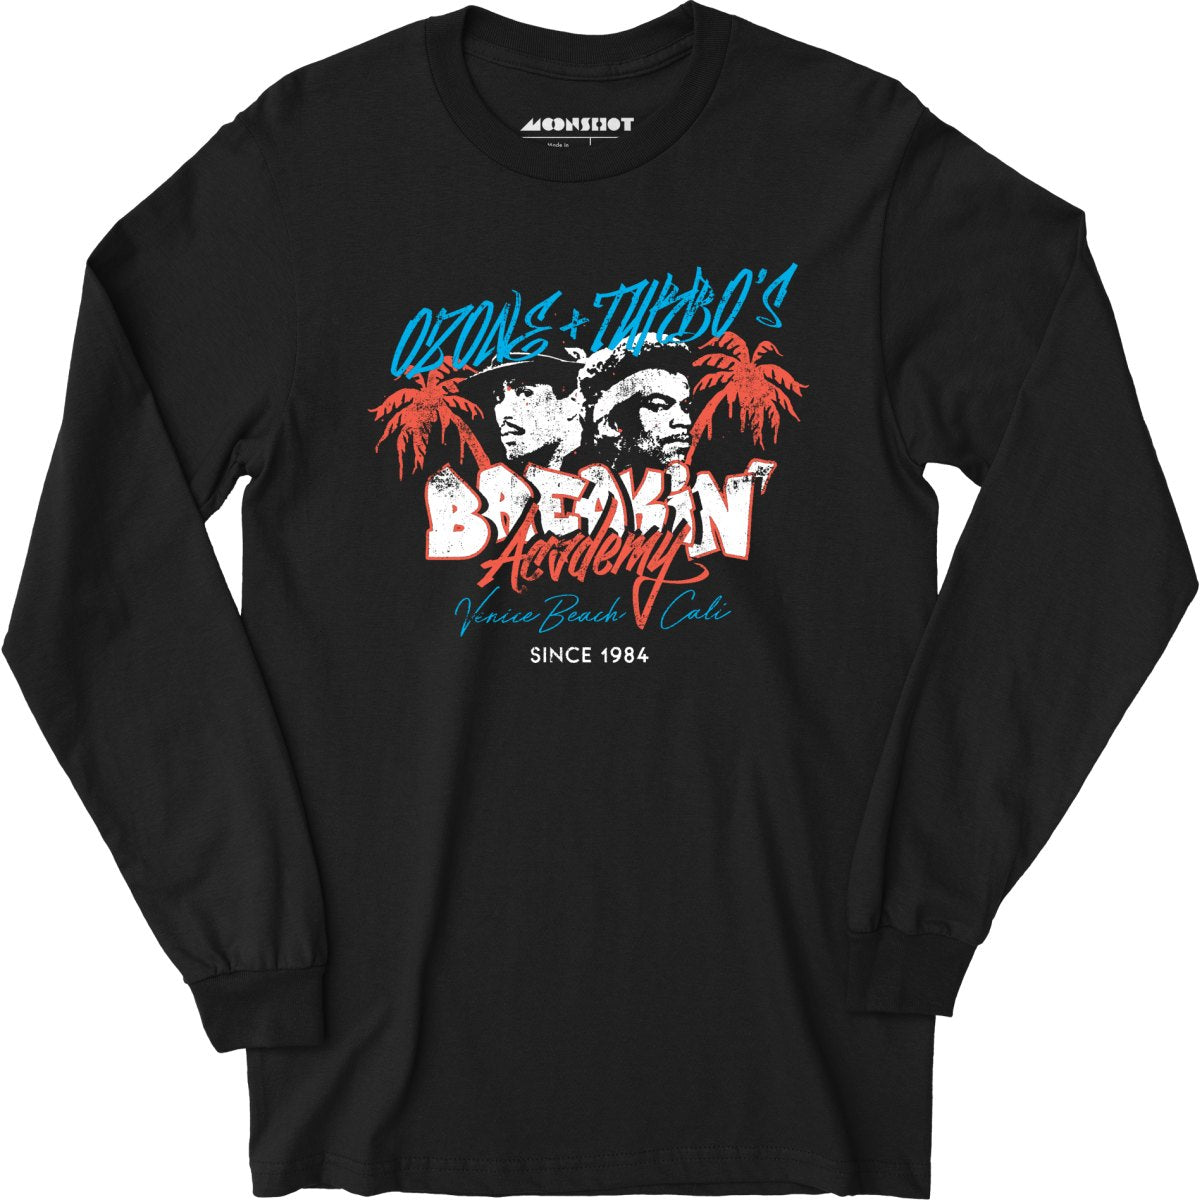 Ozone & Turbo's Breakin' Academy - Long Sleeve T-Shirt